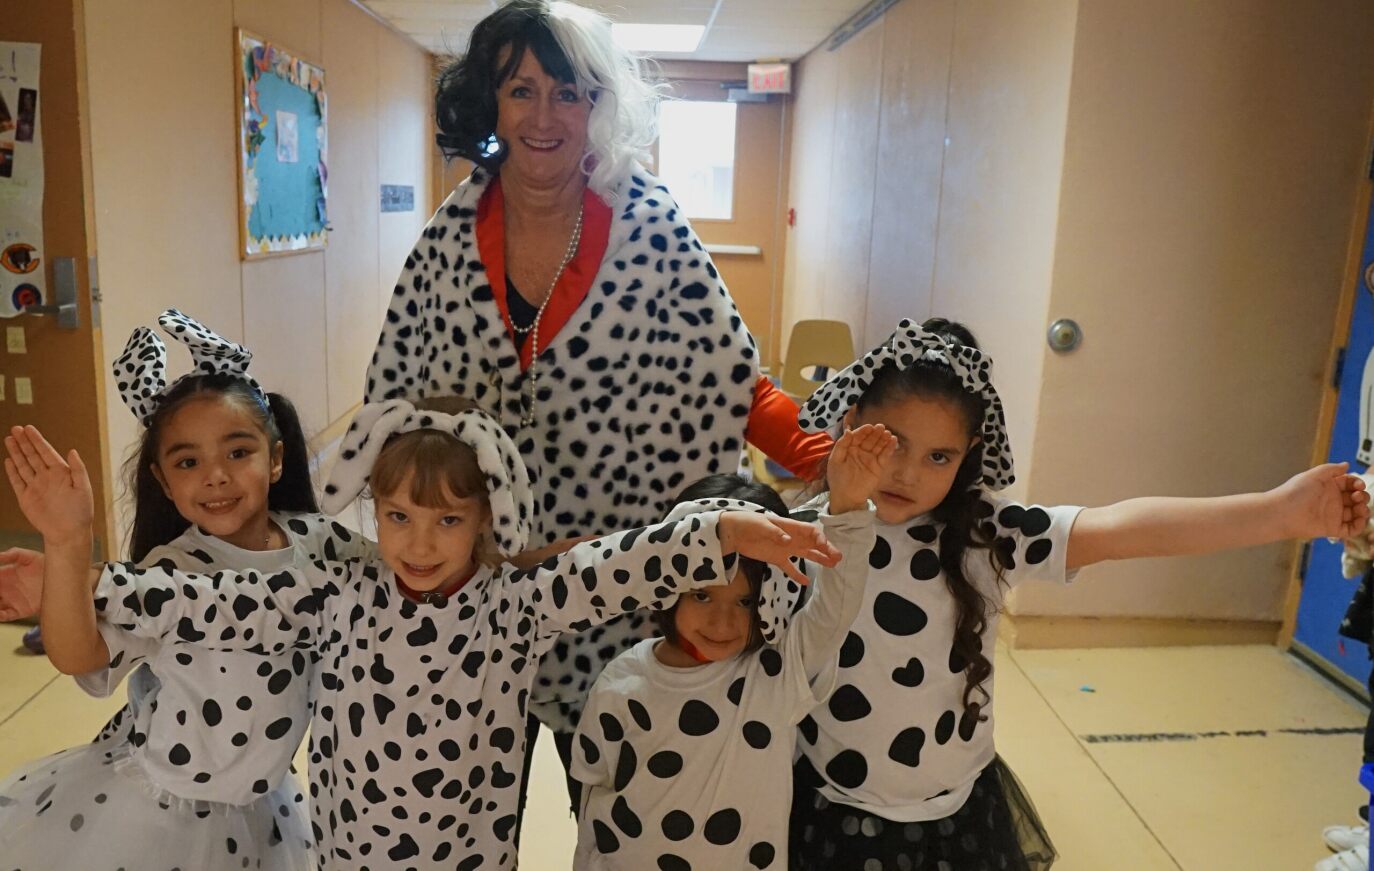 "Cruella de Vil" poses with students dressed as Dalmatian puppies